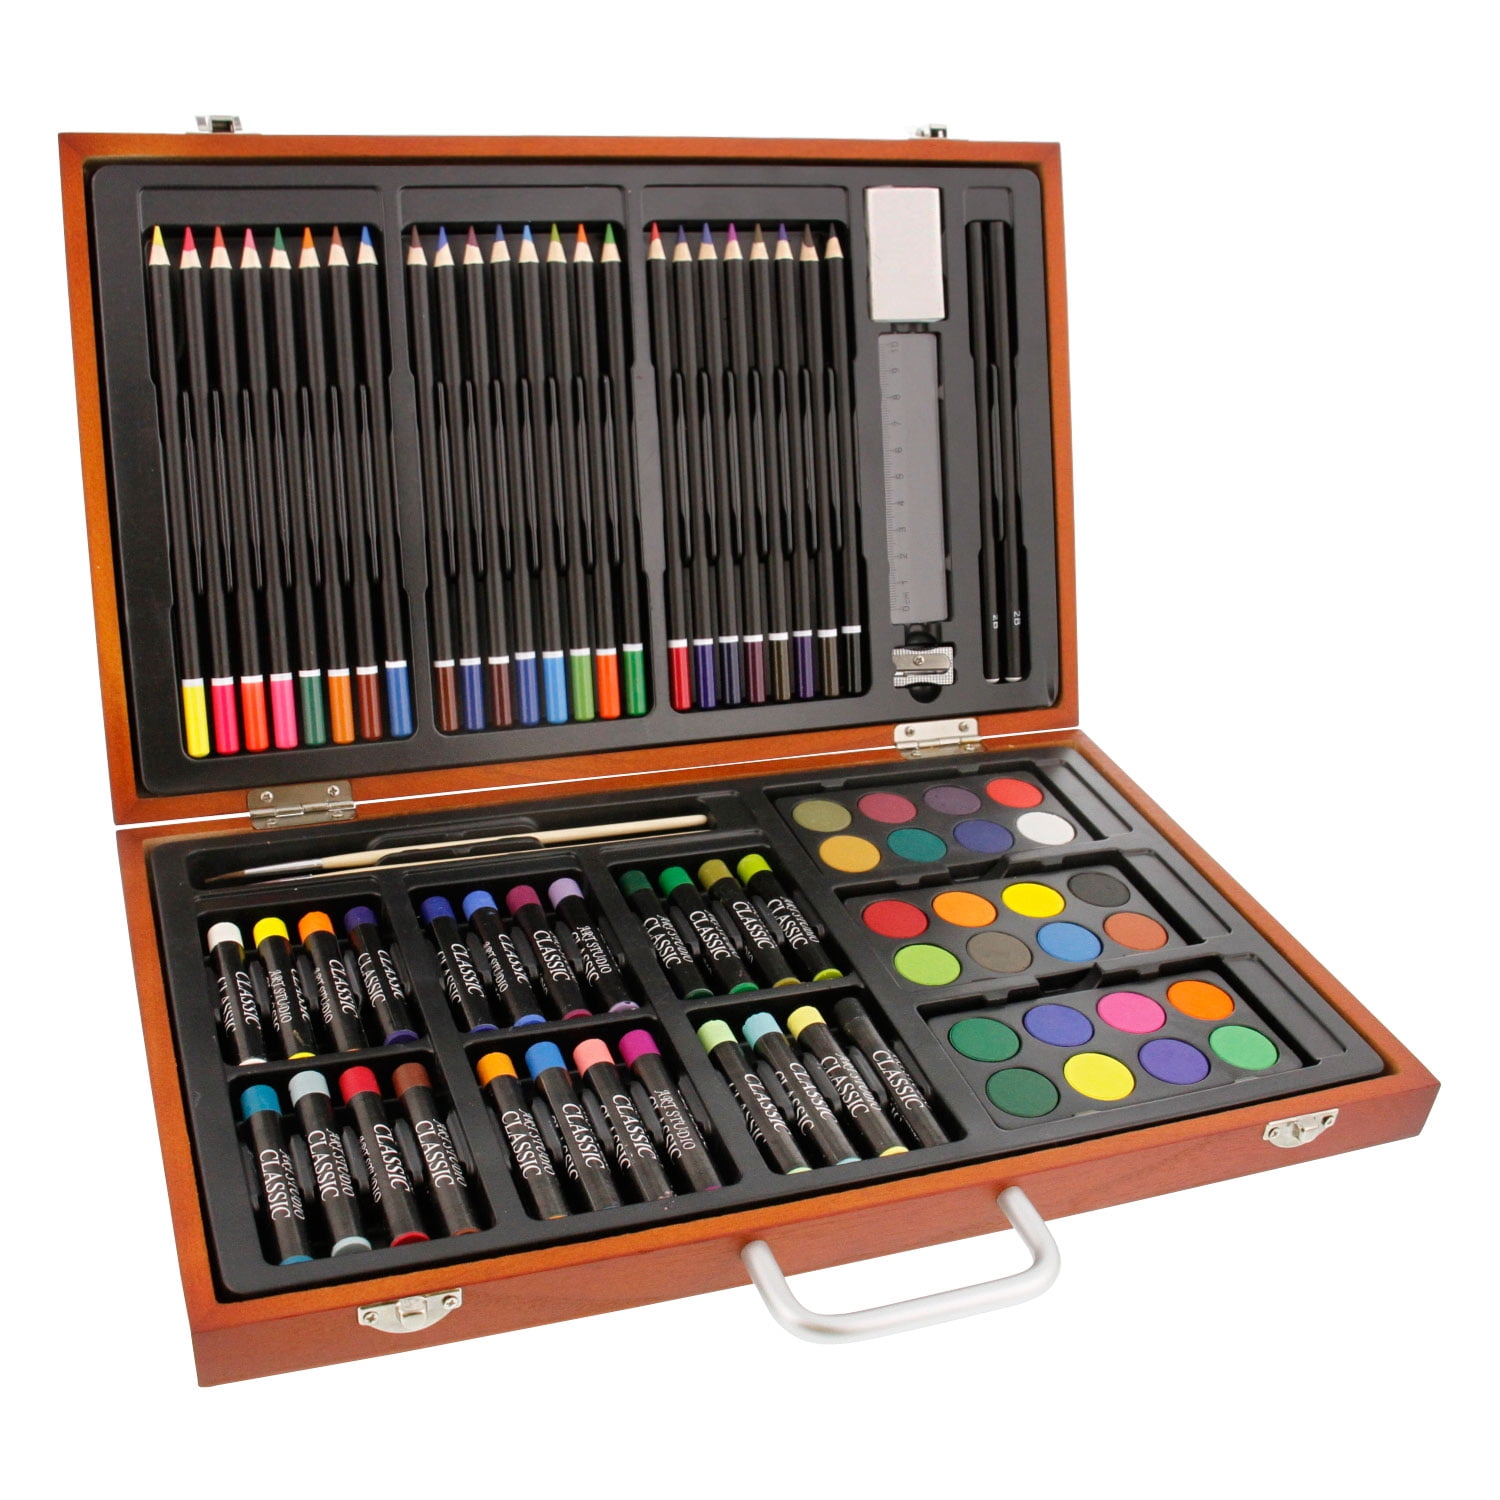 Now Contain Painting & Drawing Set Art Supply 143 Piece-Mega Wood Box Art U.S 